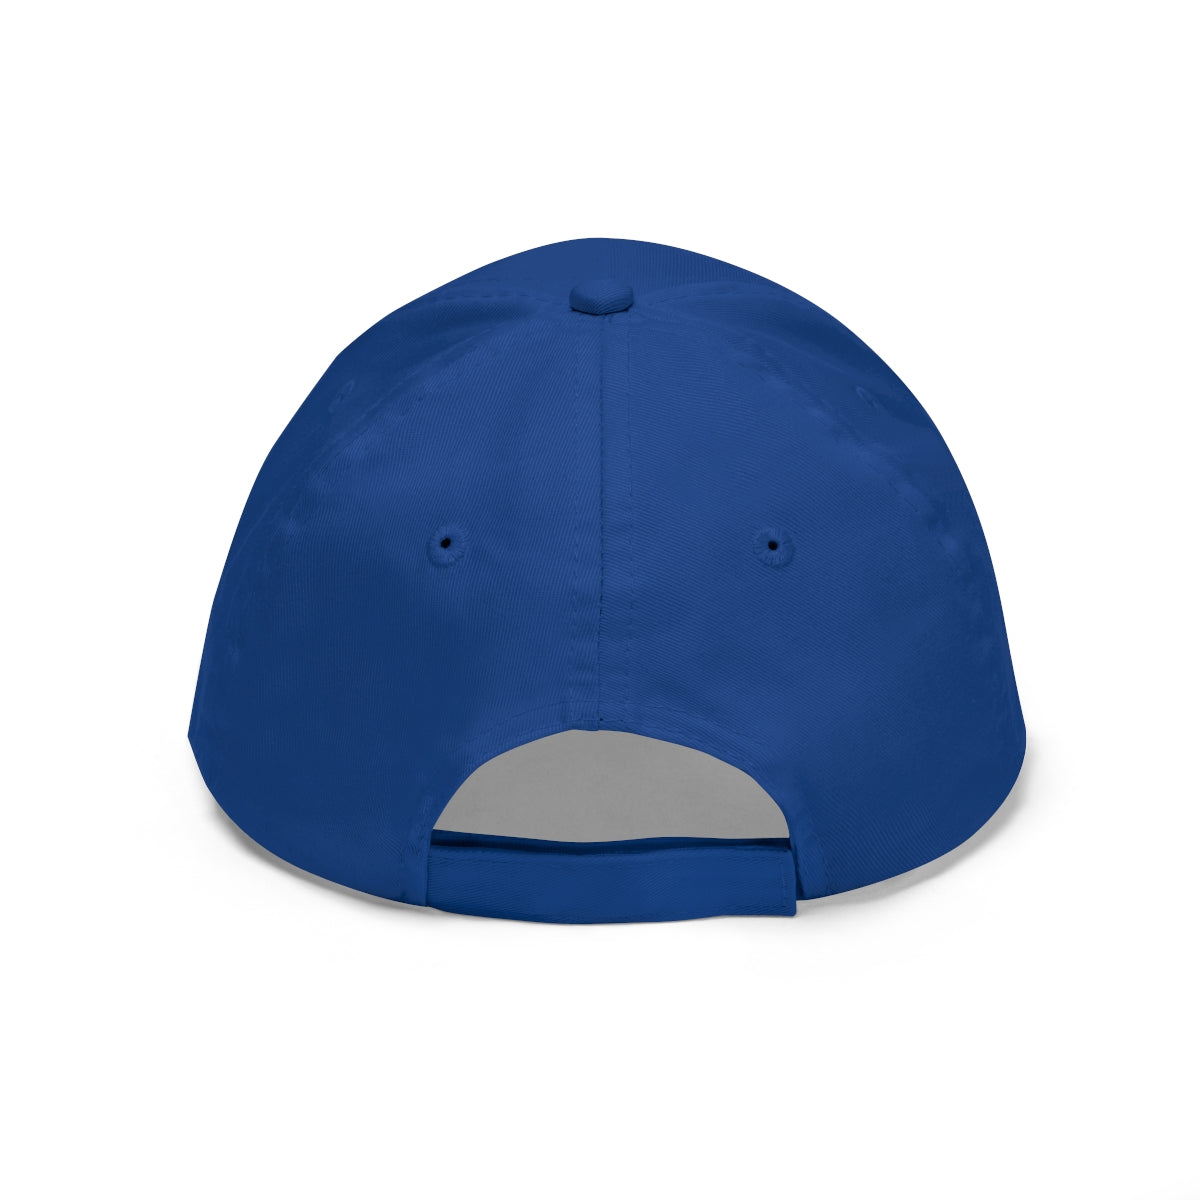 Alohi hat